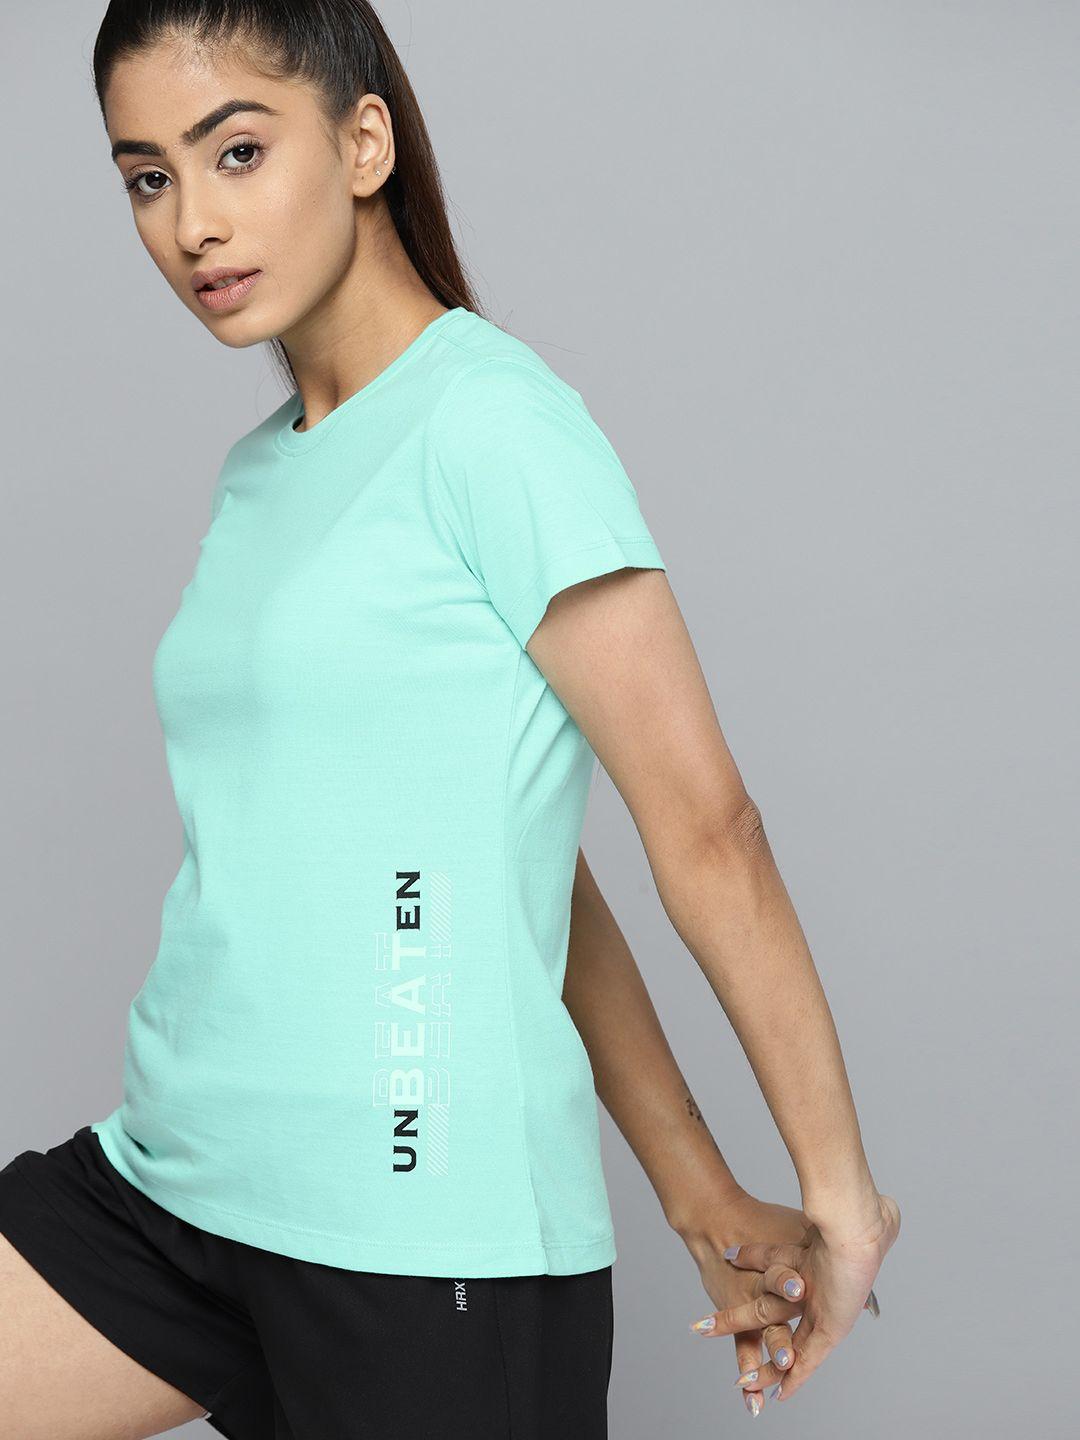 hrx-by-hrithik-roshan-typography-printed-bio-wash-training-sports-t-shirt